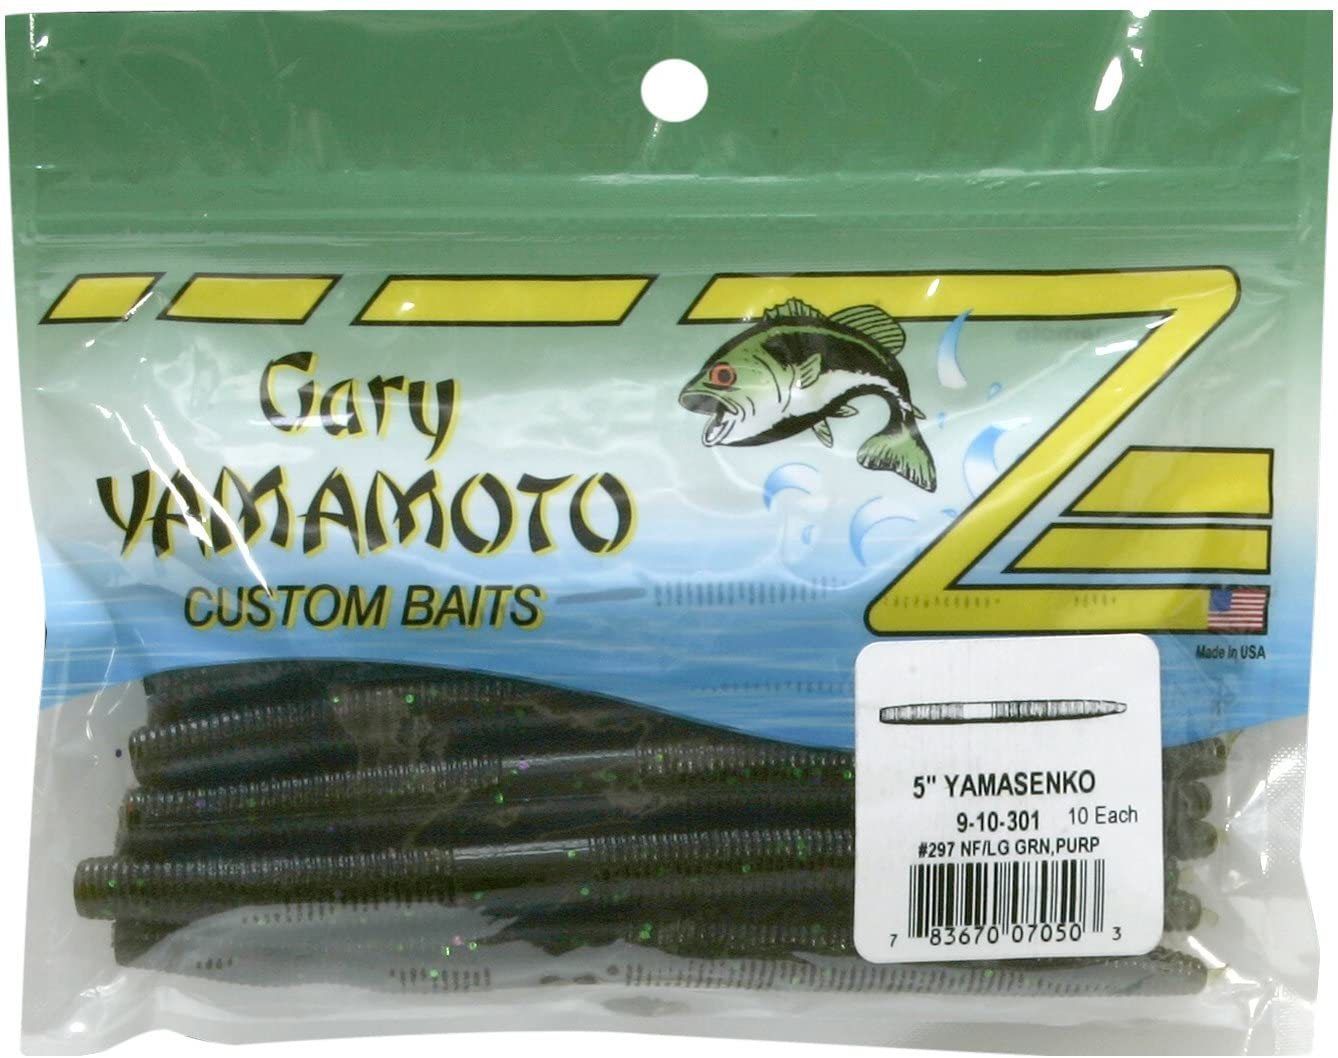 Gary Yamamoto Custom Baits Sold to GSM Outdoors